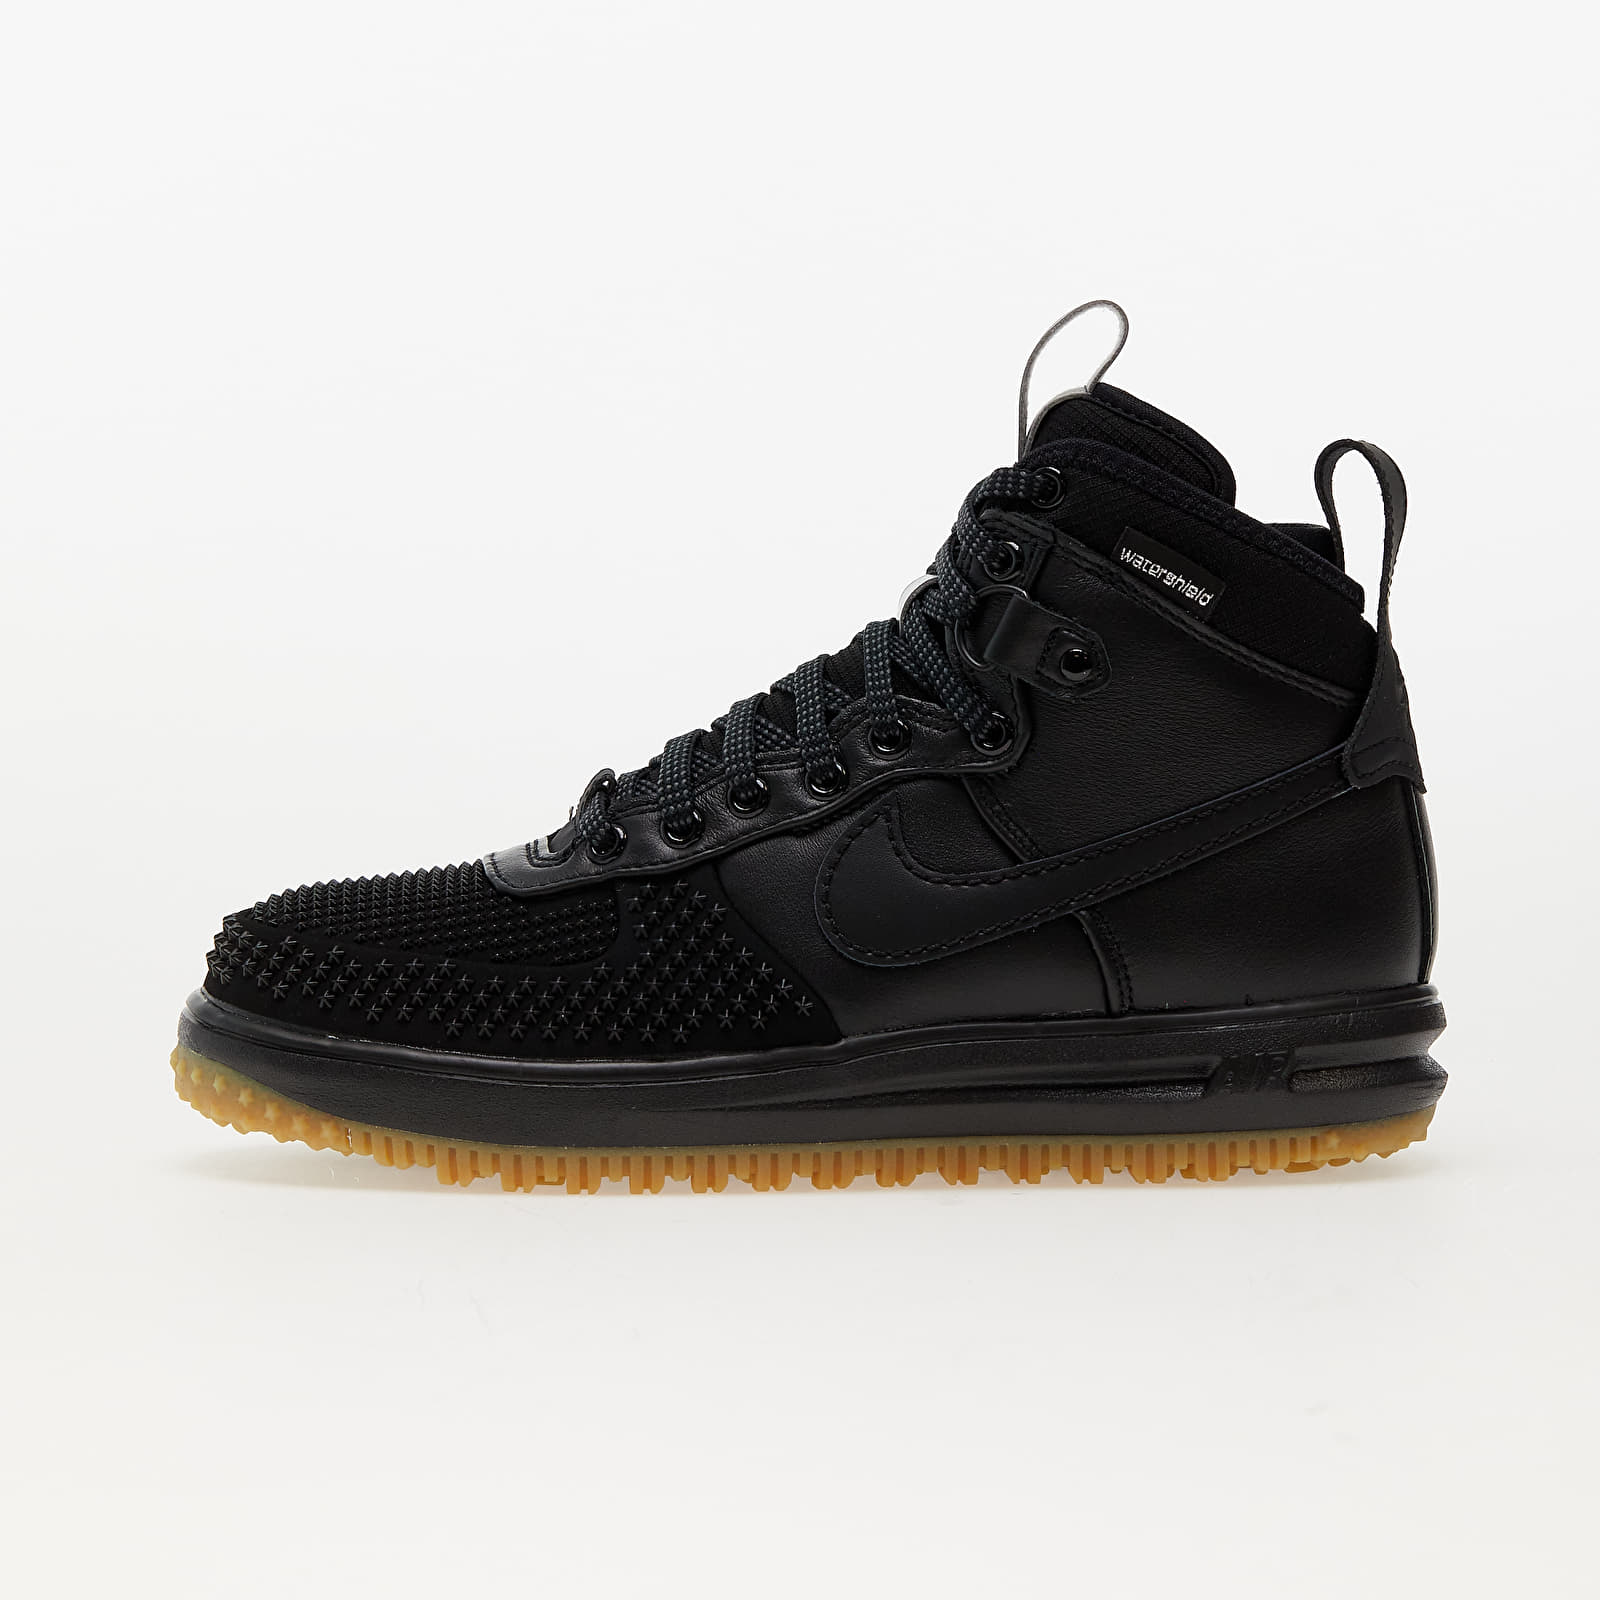 Men's shoes Nike Lunar Force 1 Duckboot Black/ Black-Metallic Silver-Anthracite